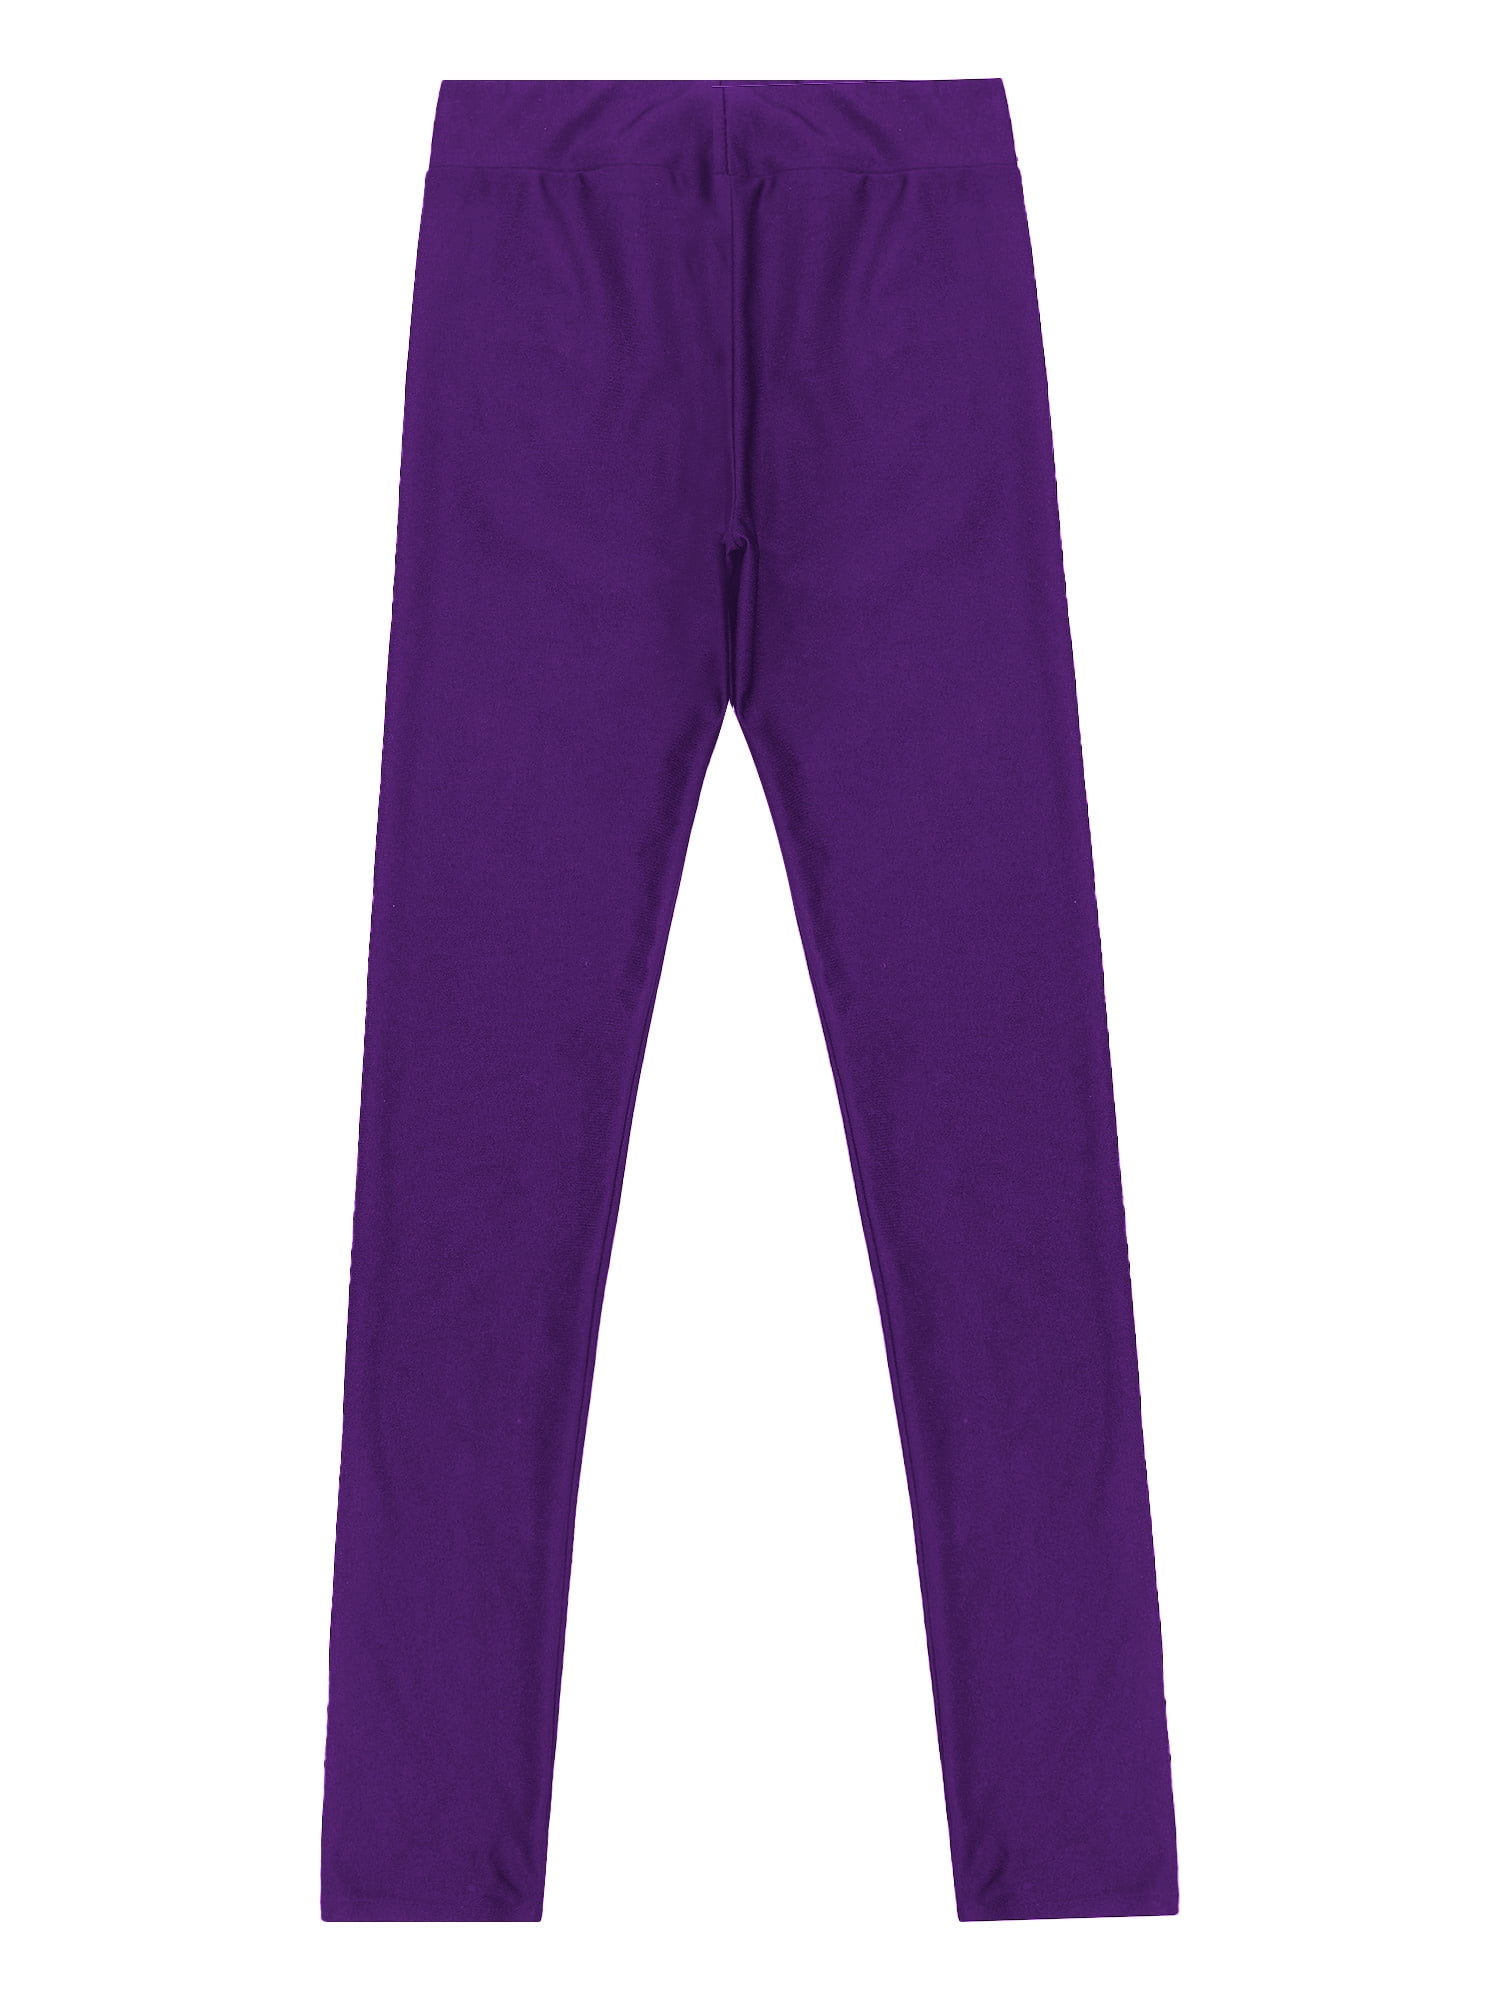 YiZYiF Kids Girls Stretchy Athletic Long Pants Leggings Yoga Skating Skinny  Tights Purple 14